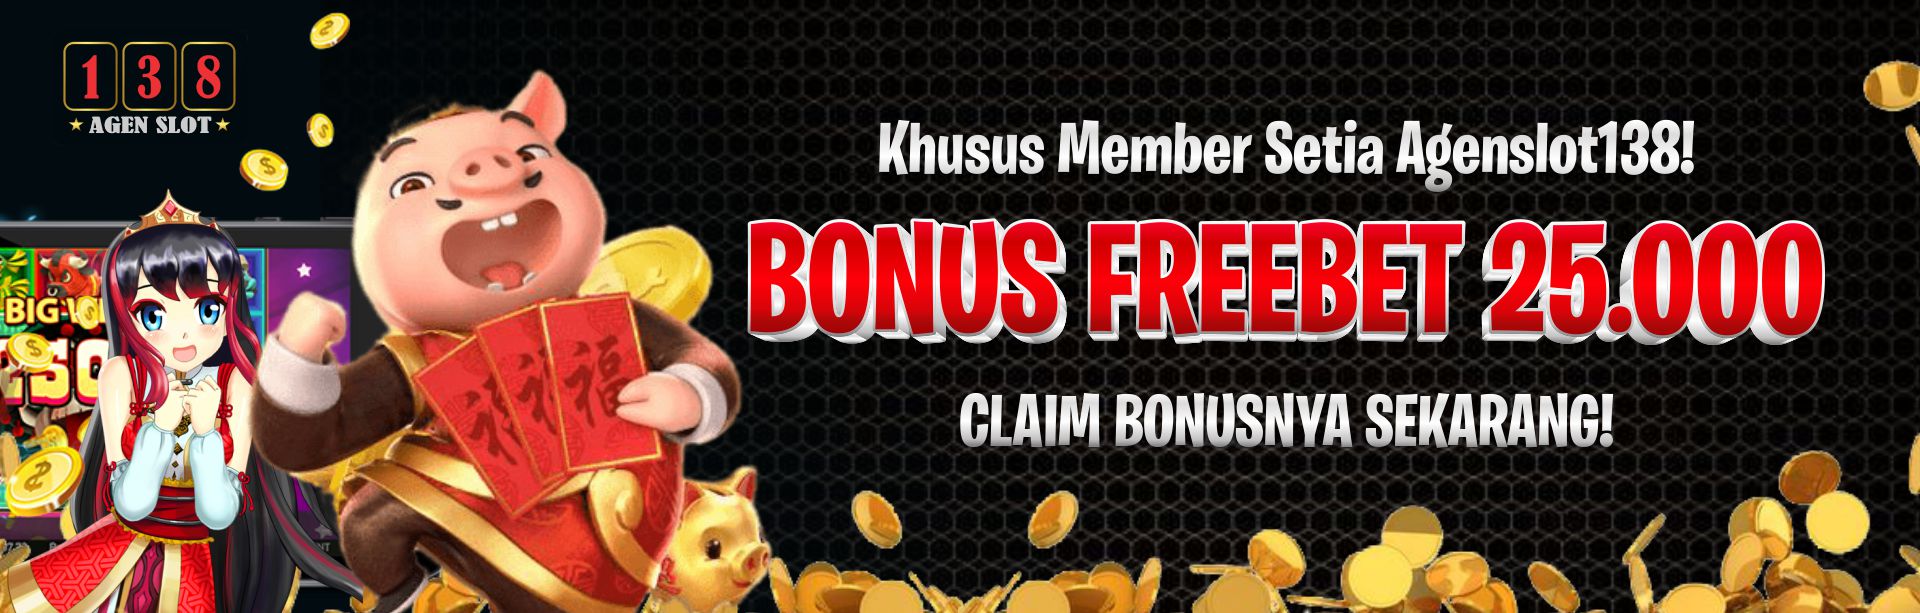 Bonus freebet 25k